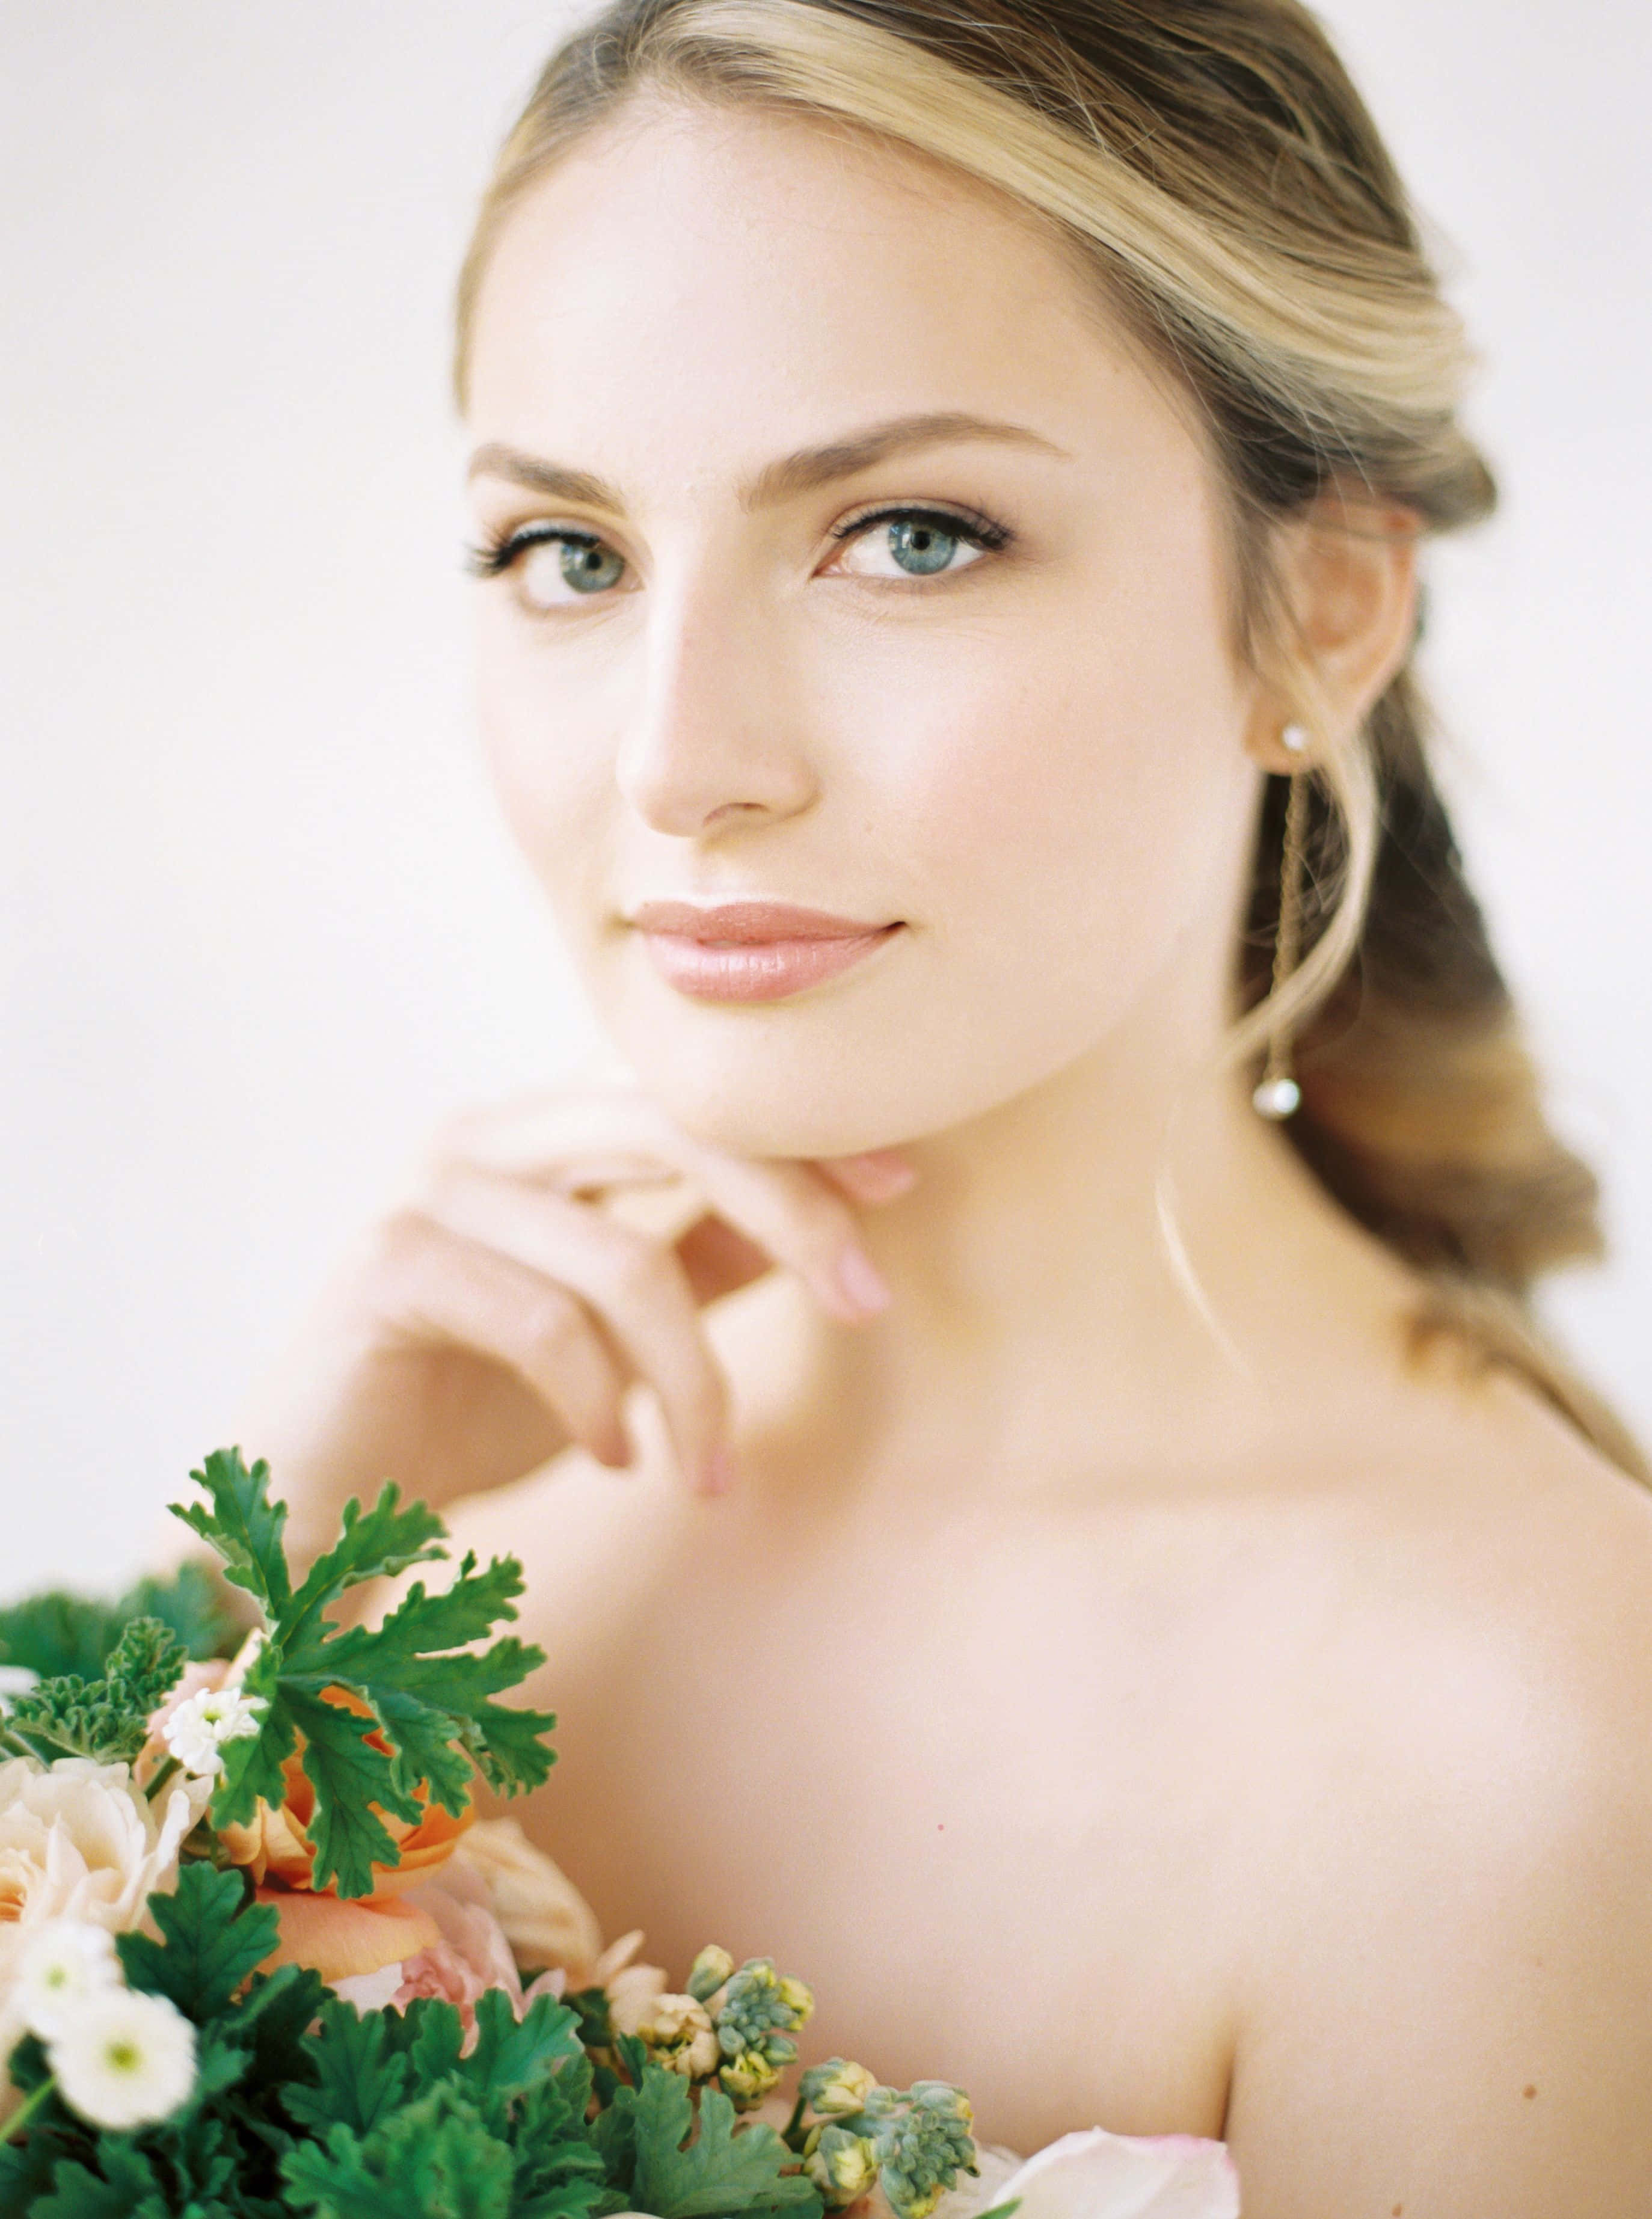 Download Bridal Makeup Pictures 2747 X 3690 | Wallpapers.com